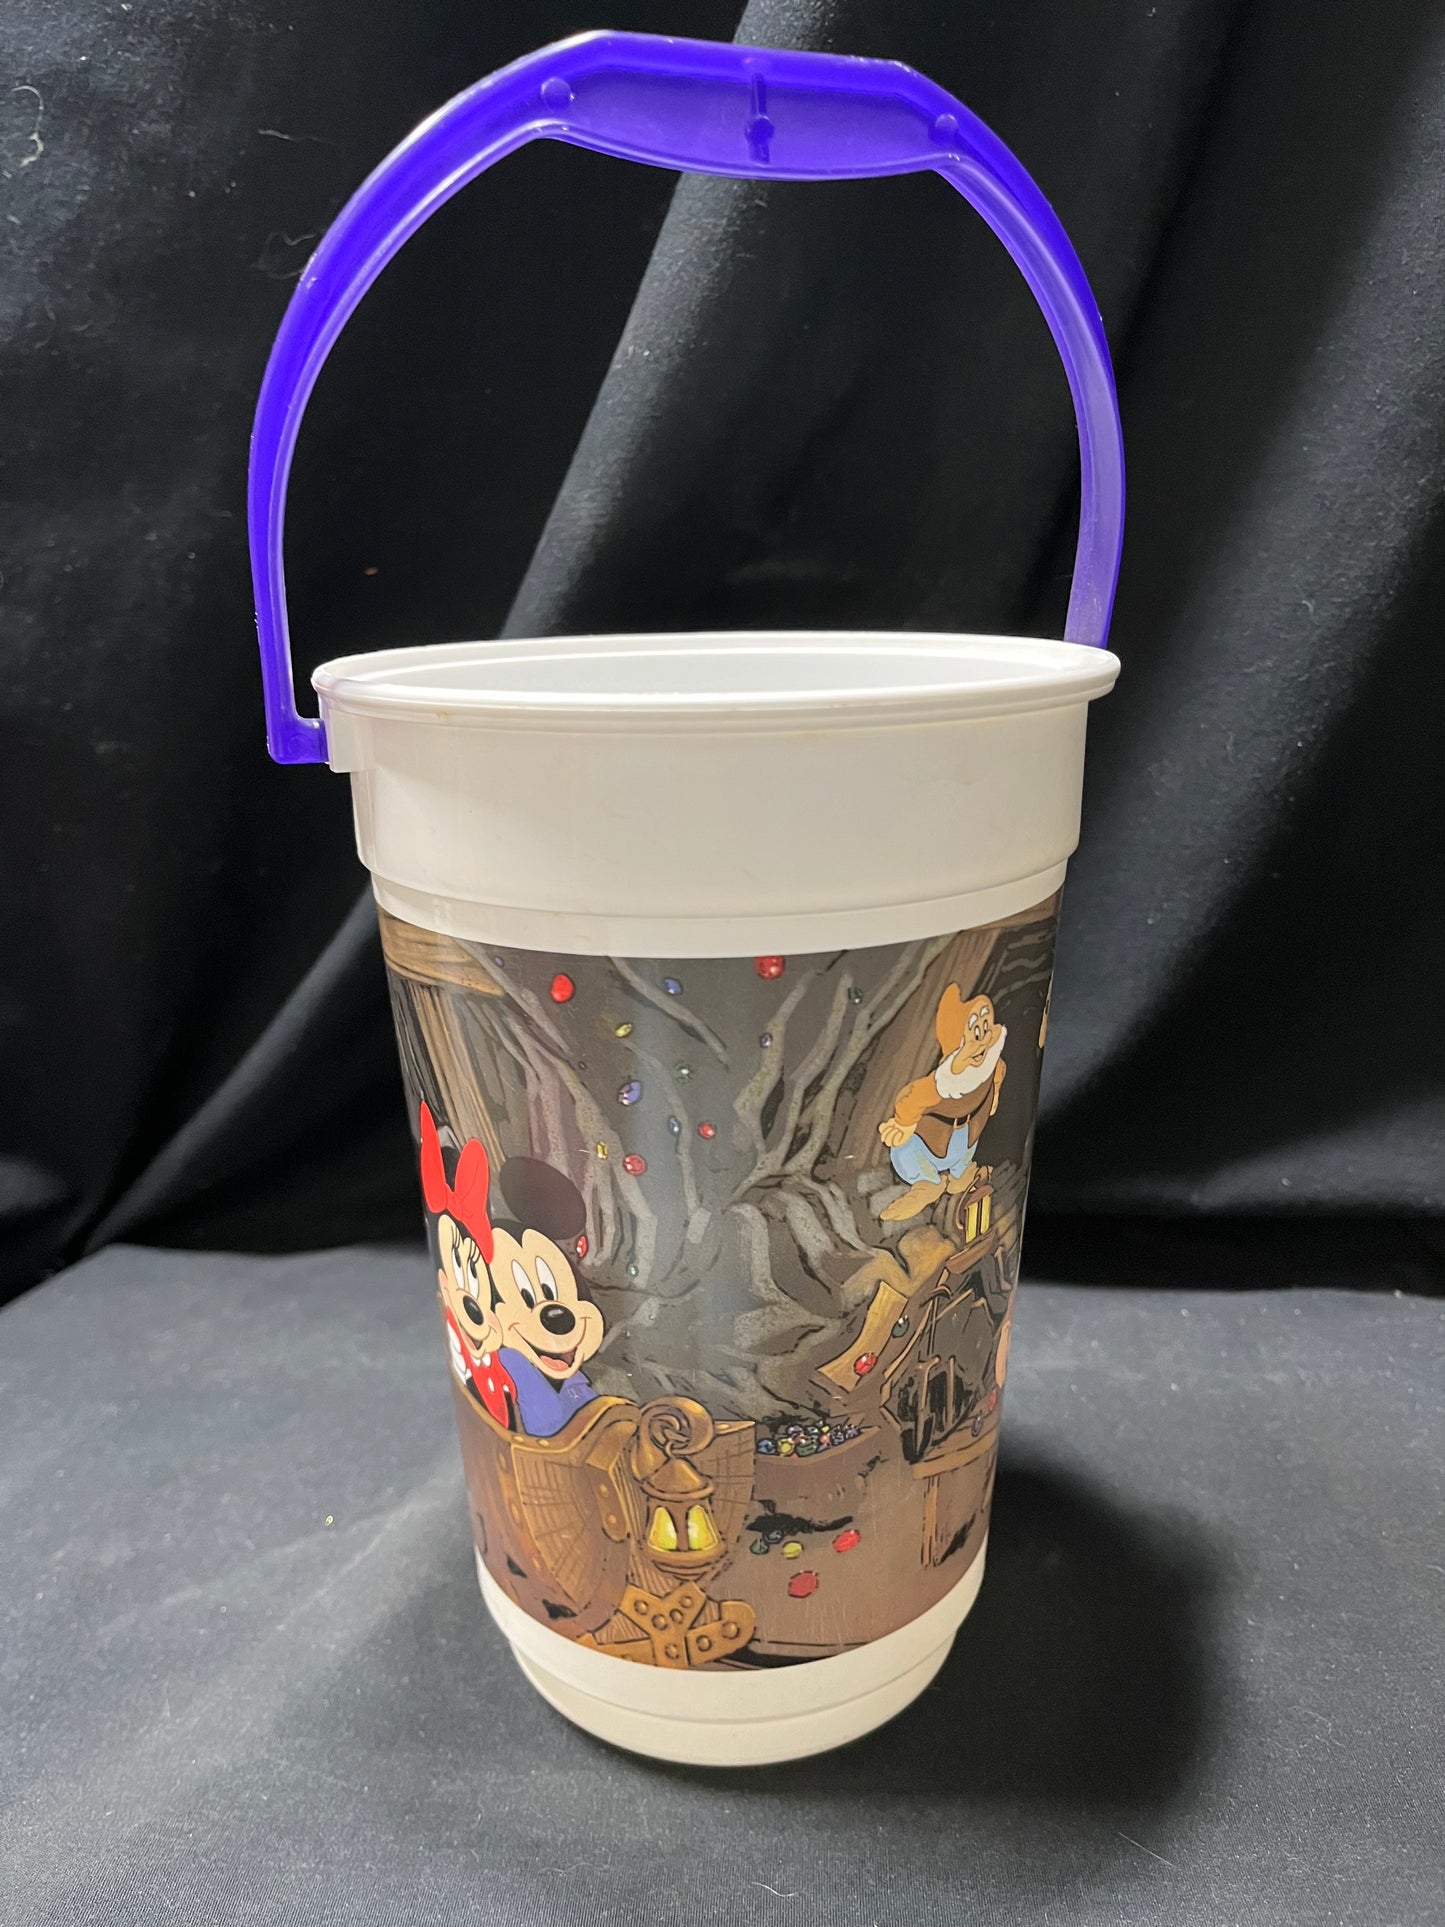 Disney Parks Popcorn Bucket Snow White Mine Cart - Missing Lid